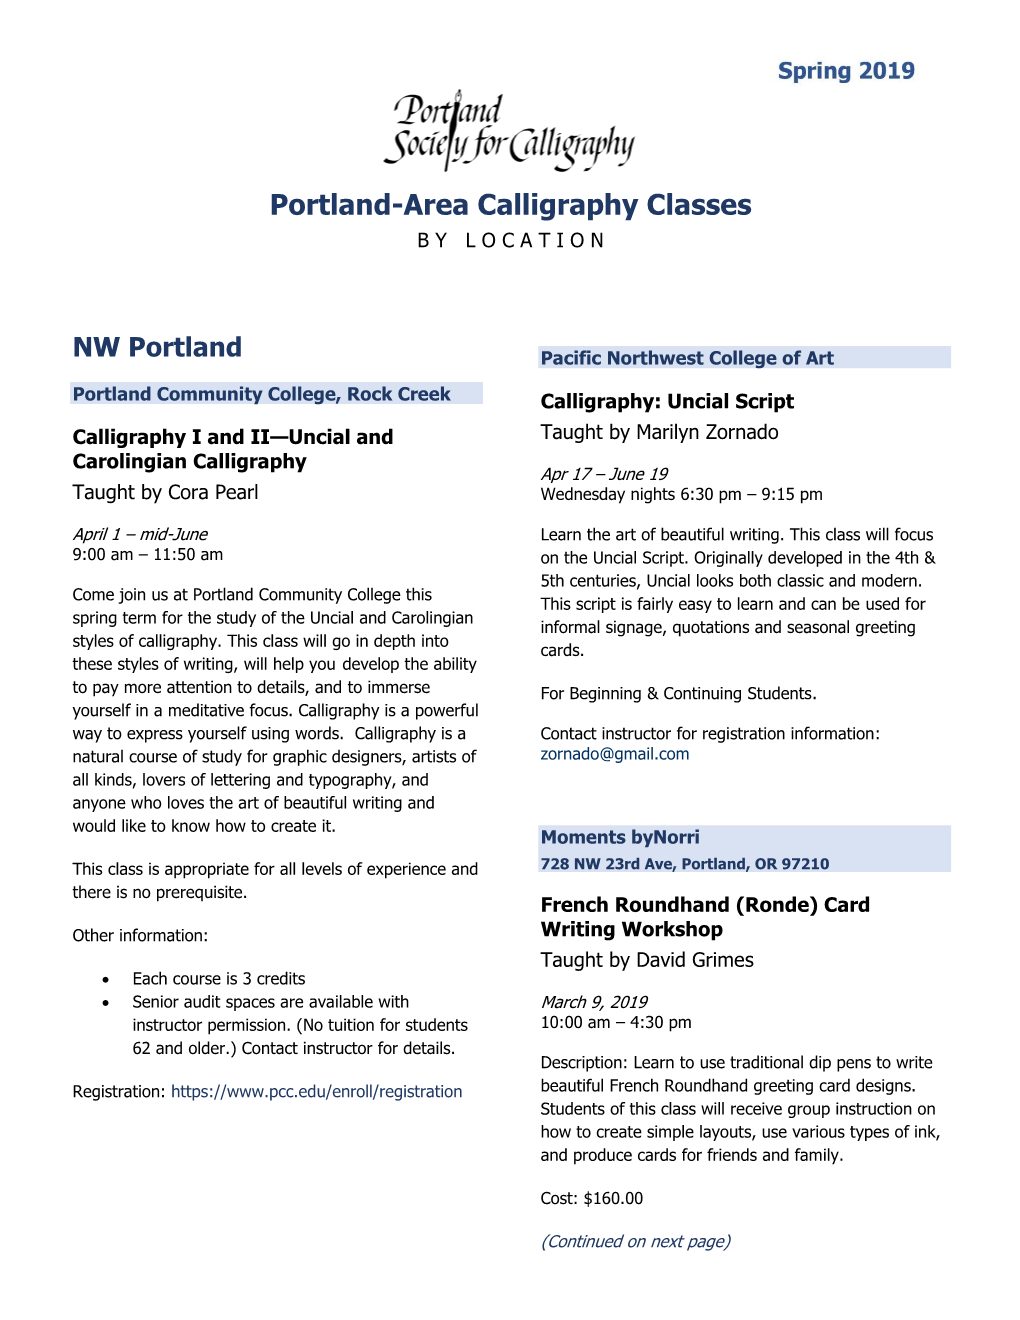 Portland-Area Calligraphy Classes B Y L O C a T I O N